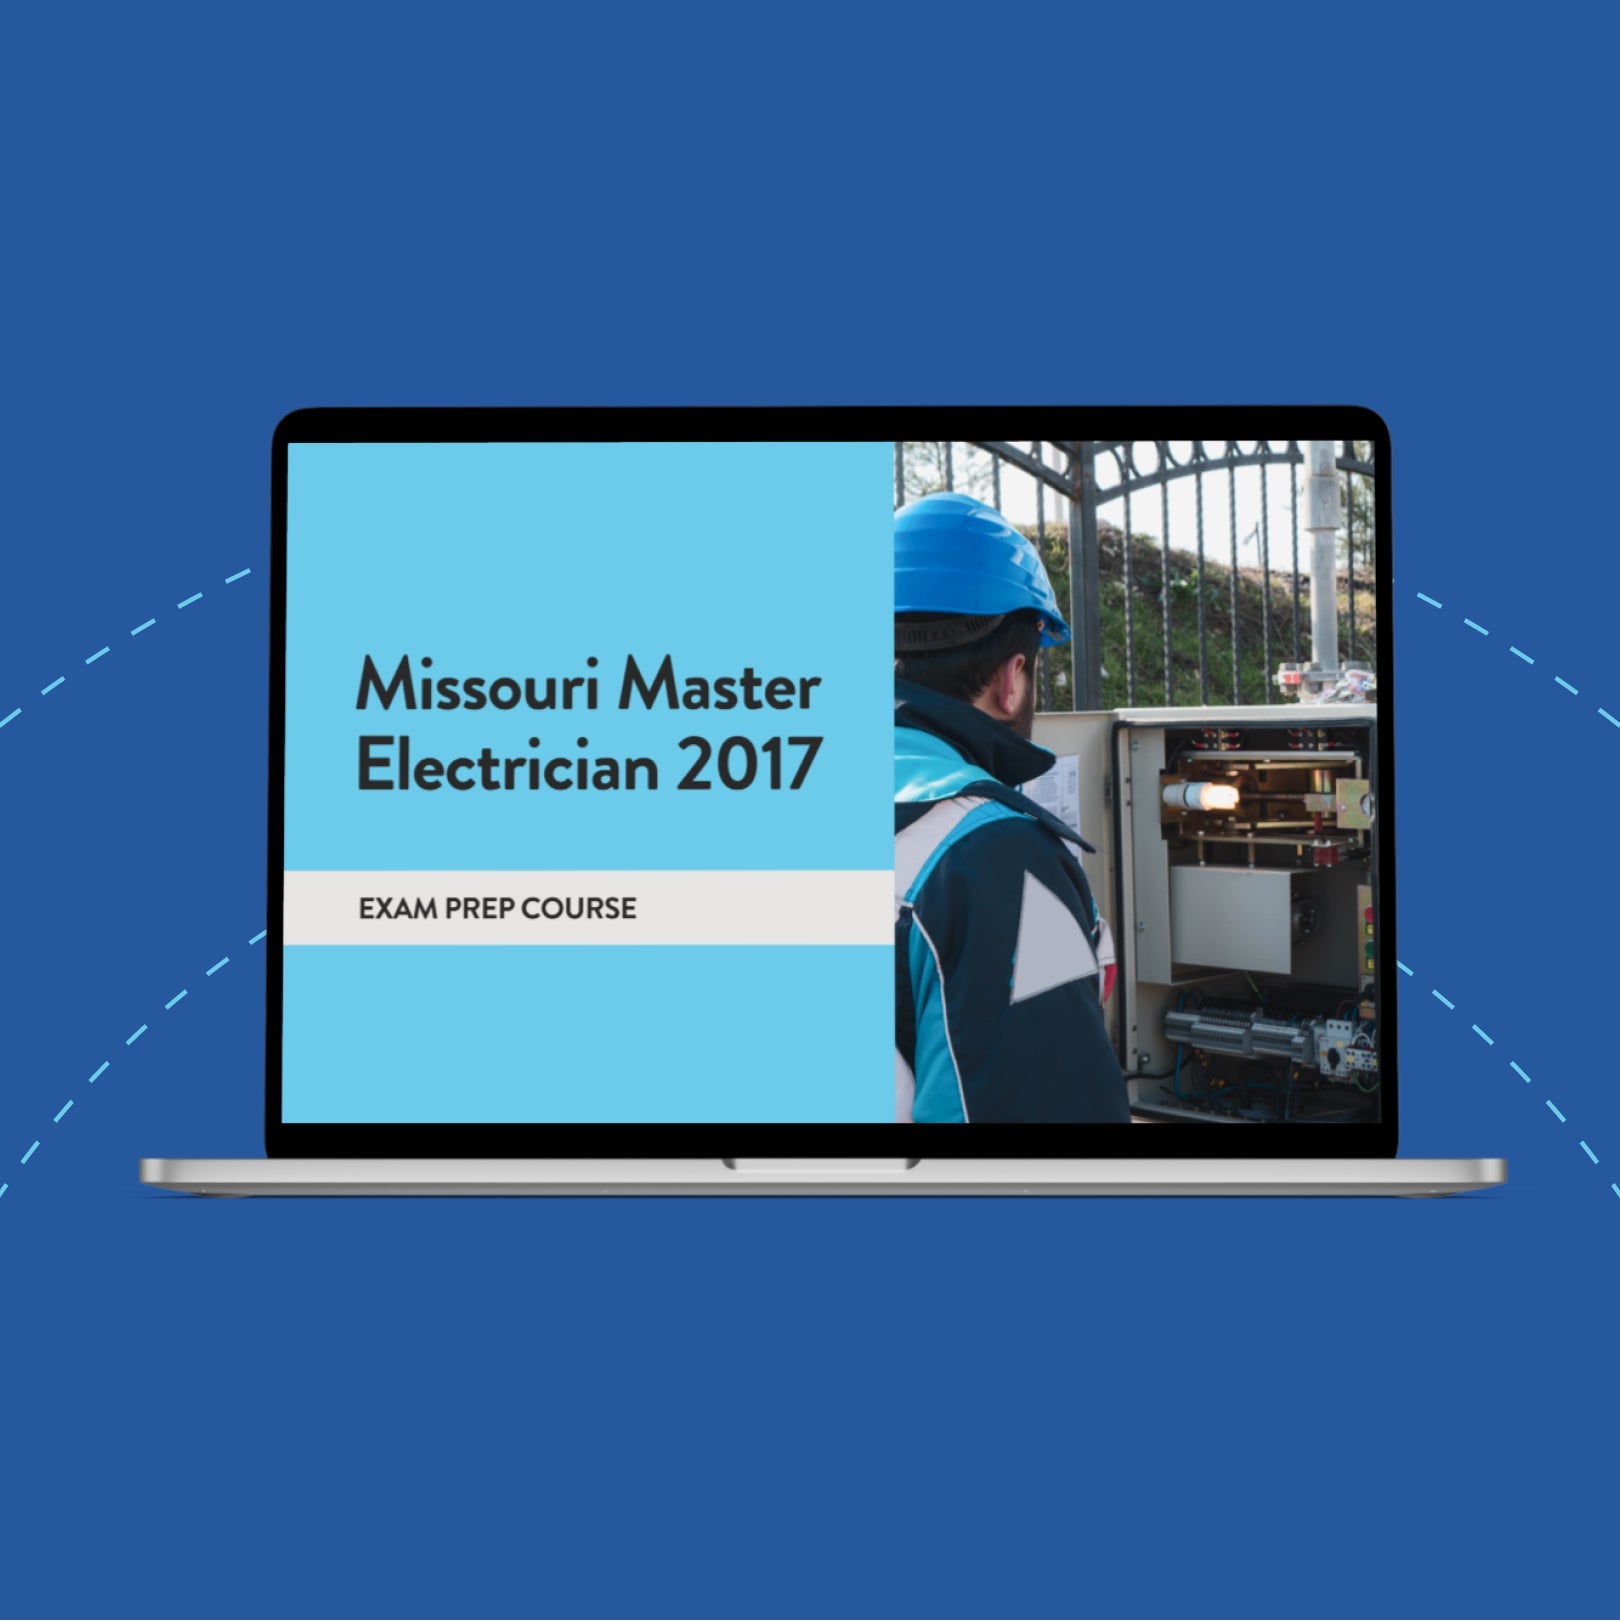 Missouri Master Electrician 2017 Exam Prep Course